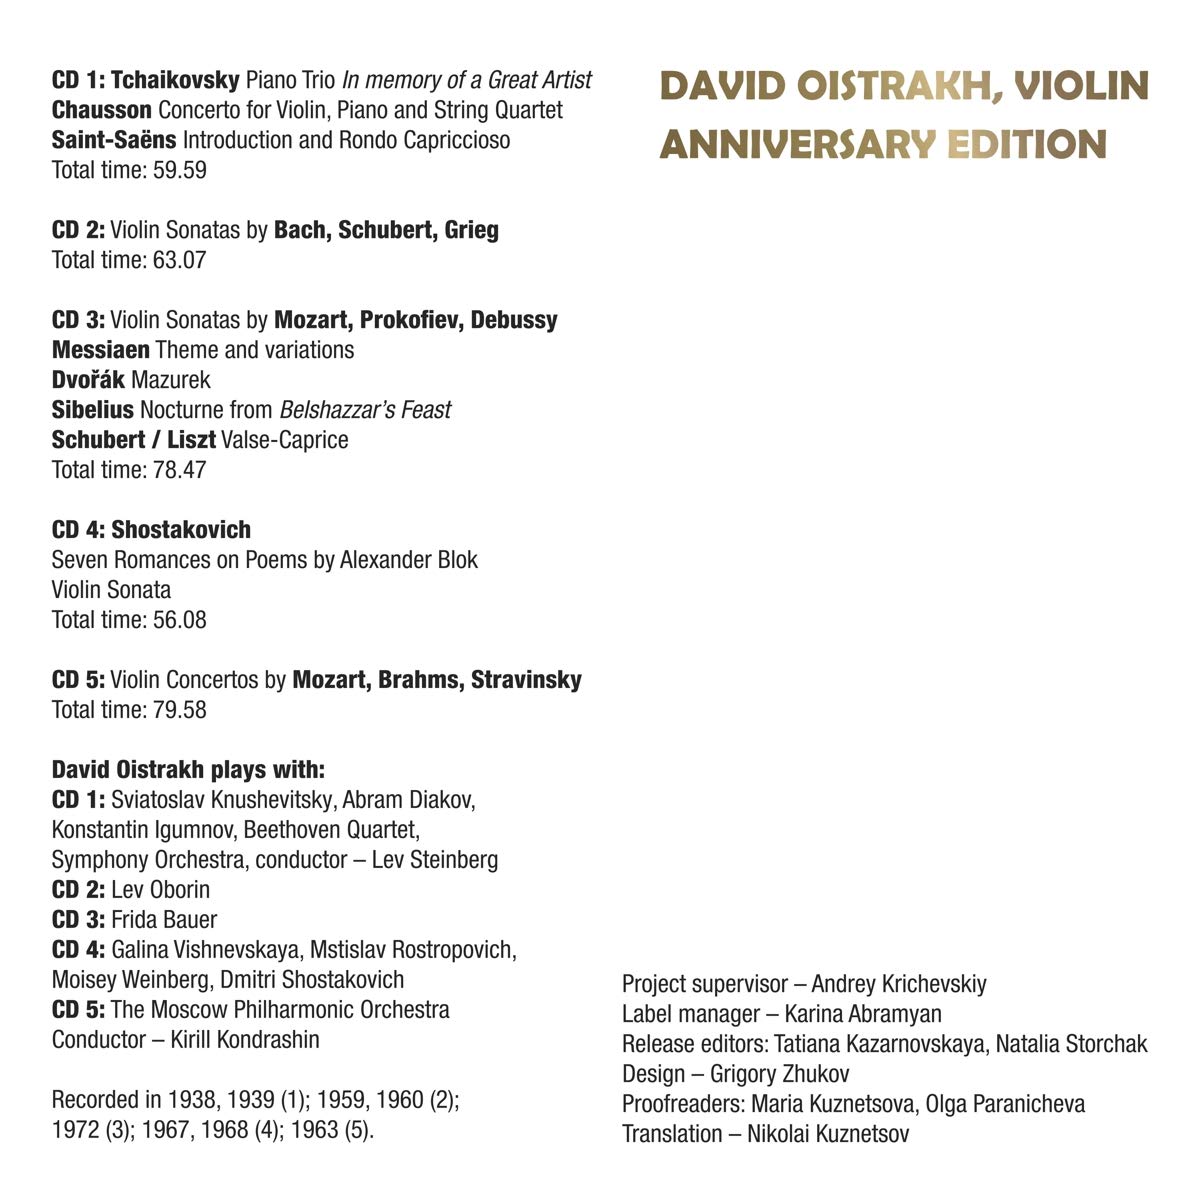 David Oistrakh 다비드 오이스트라흐 기념 에디션 (Anniversary Edition)